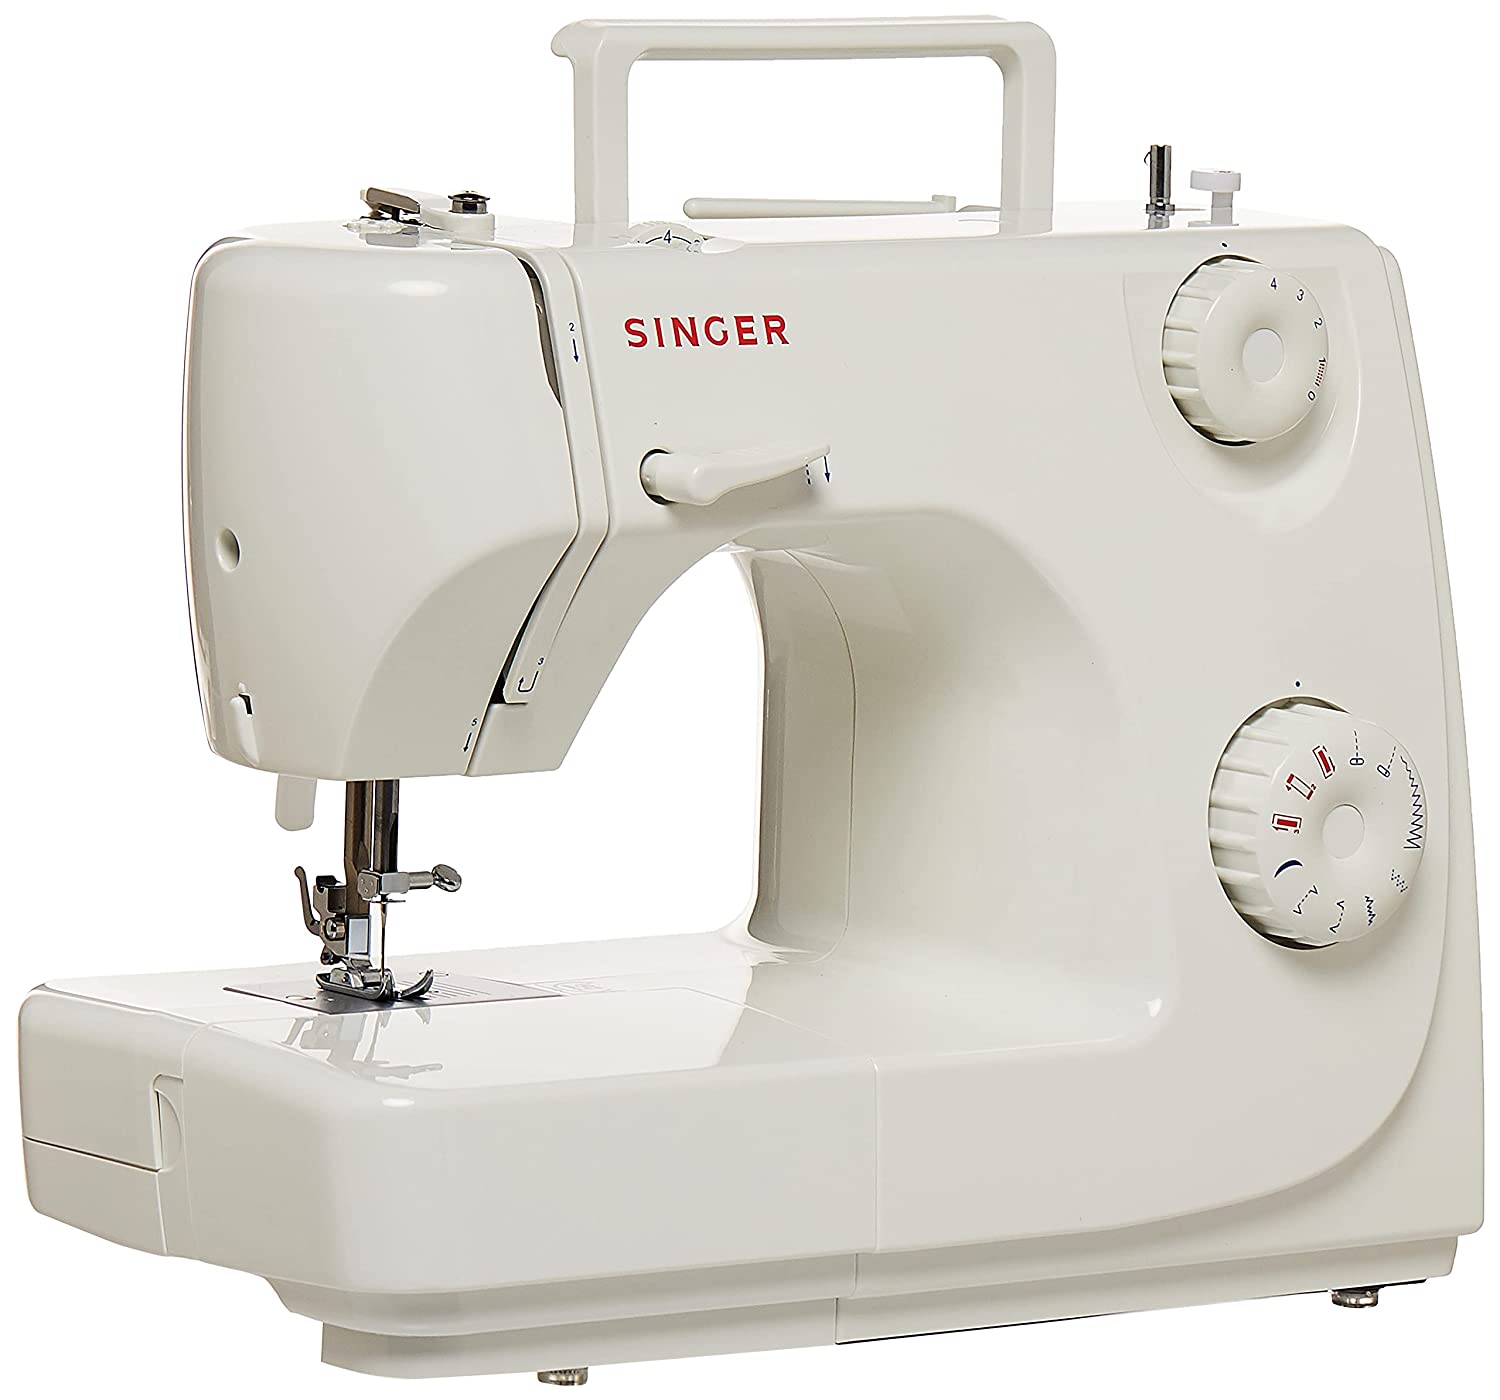 Singer Sewing Machine, SIN-8280